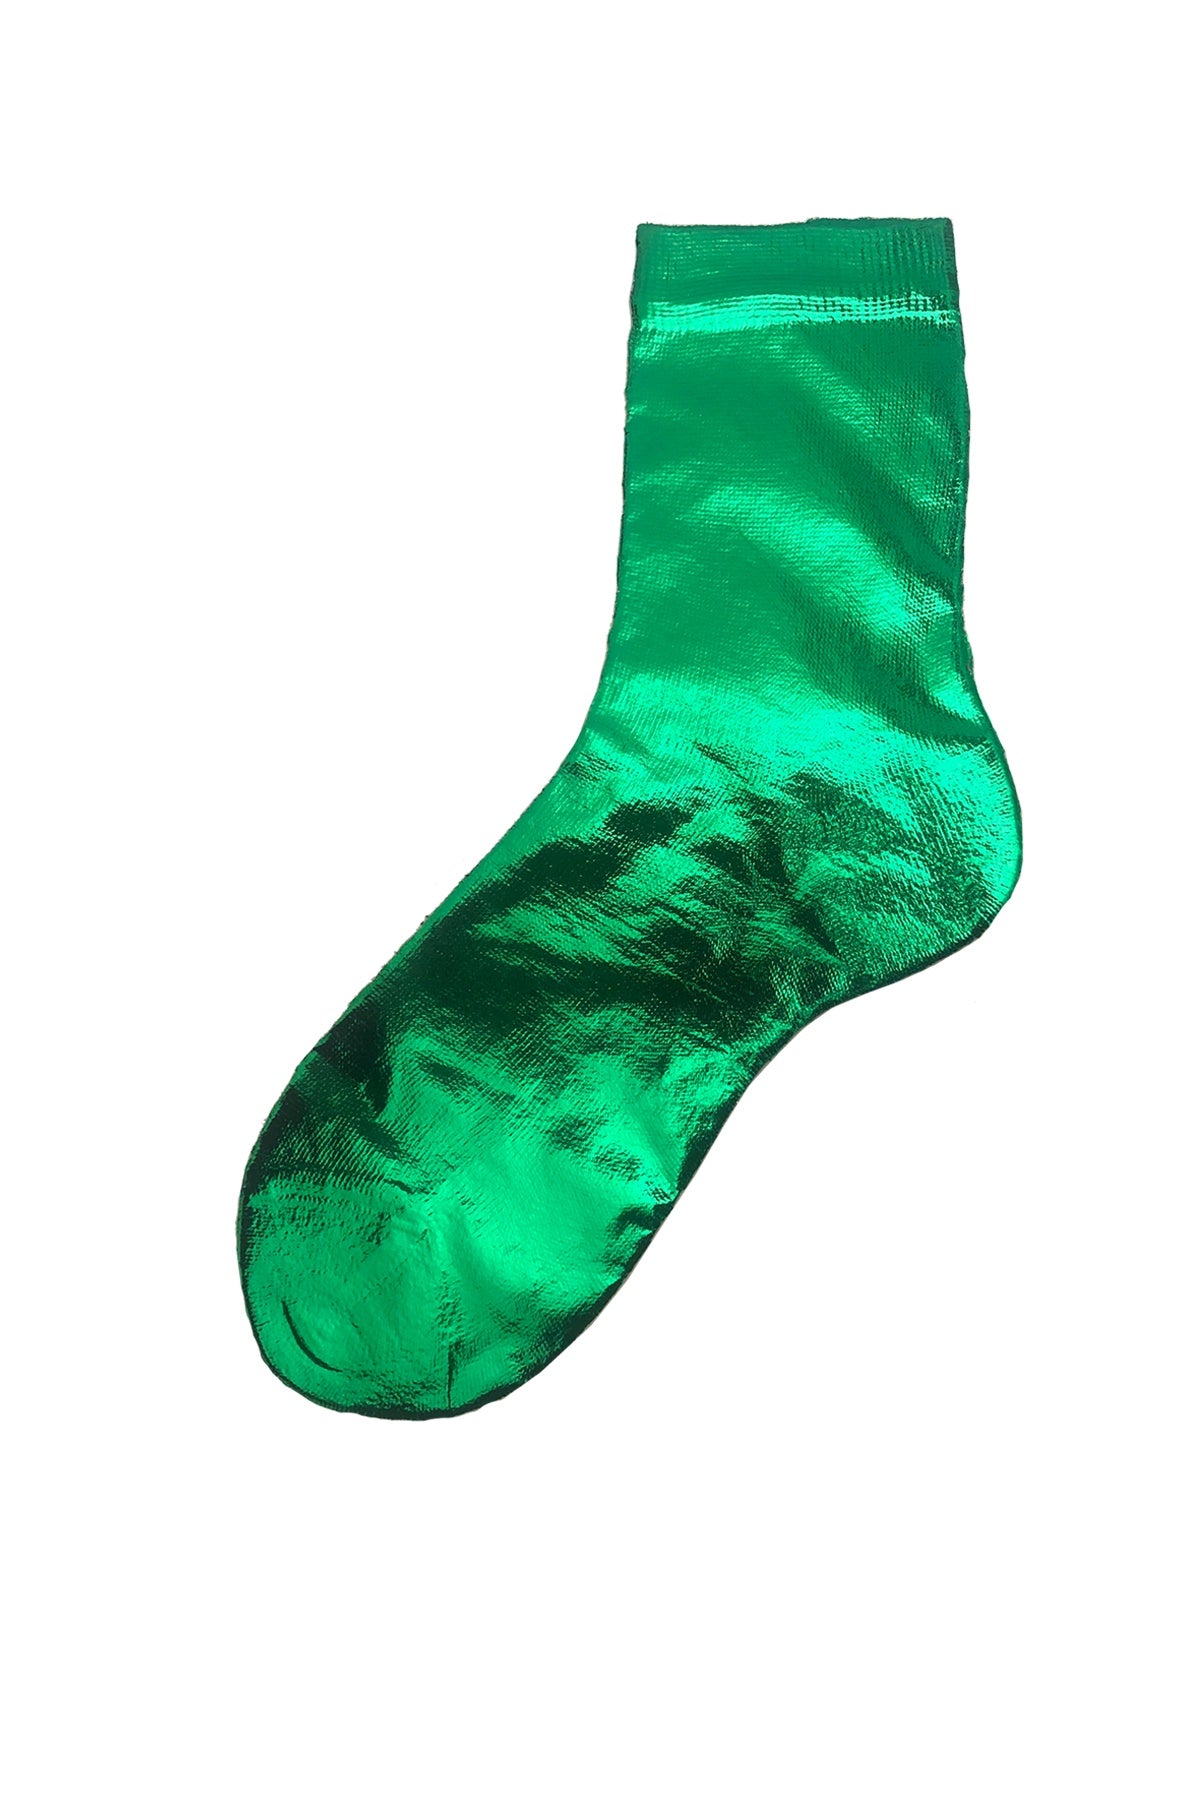 Metallic Socks - Emerald Green